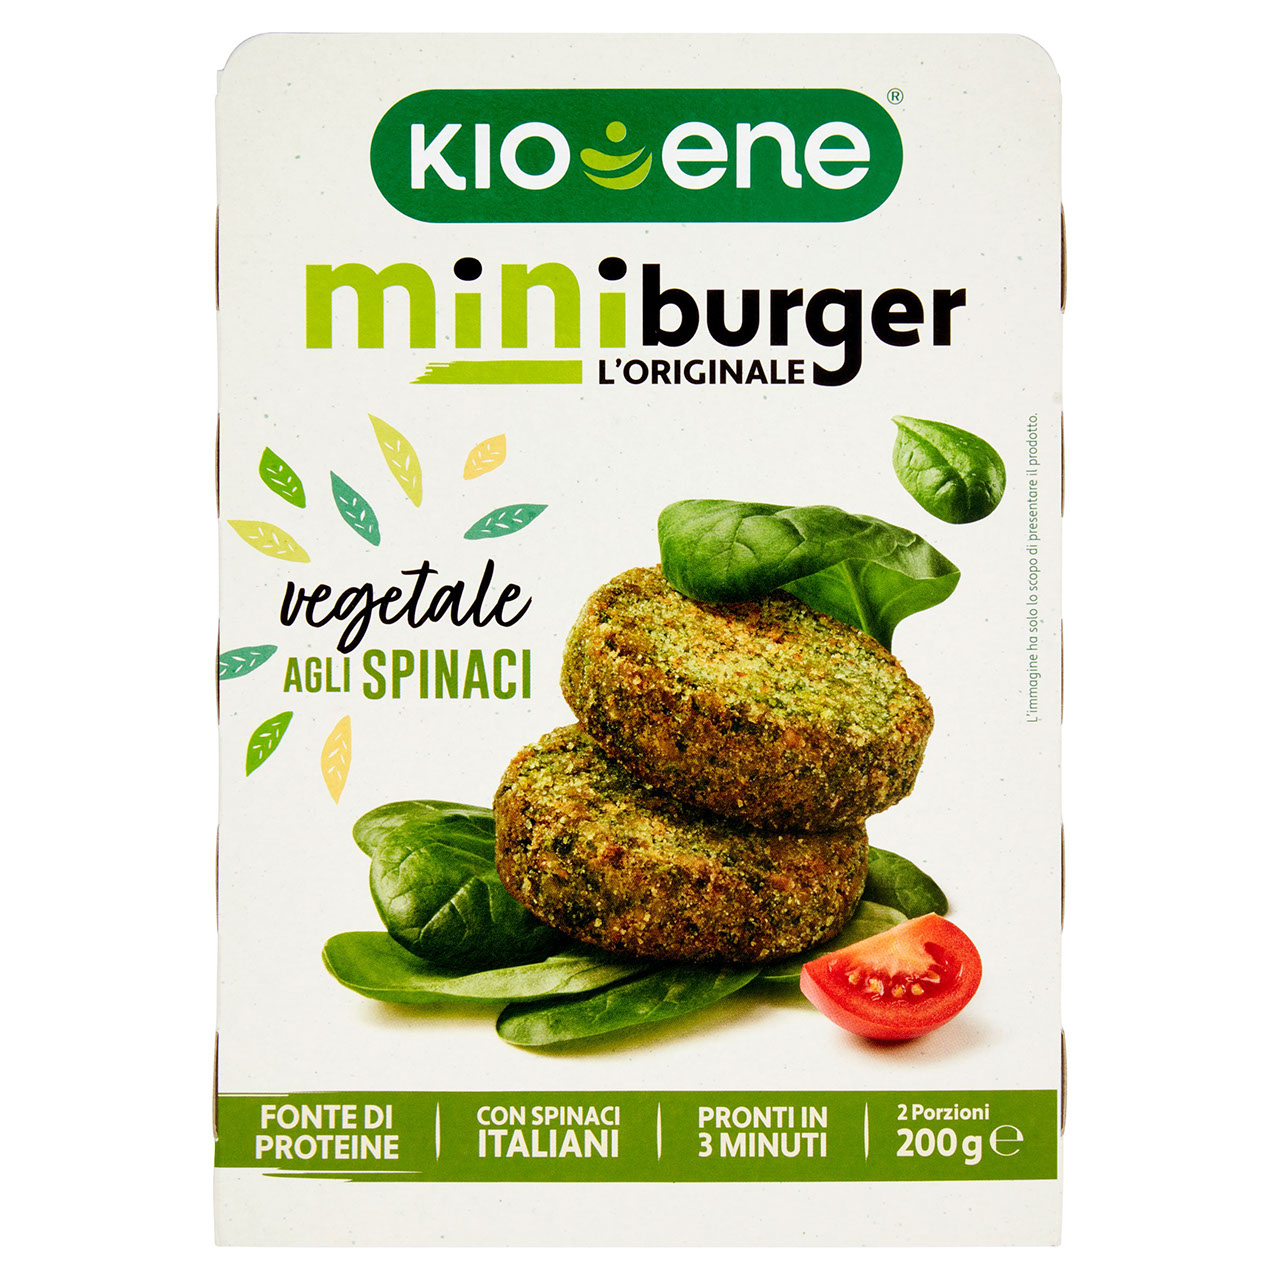 Kioene miniburger agli Spinaci in vendita online